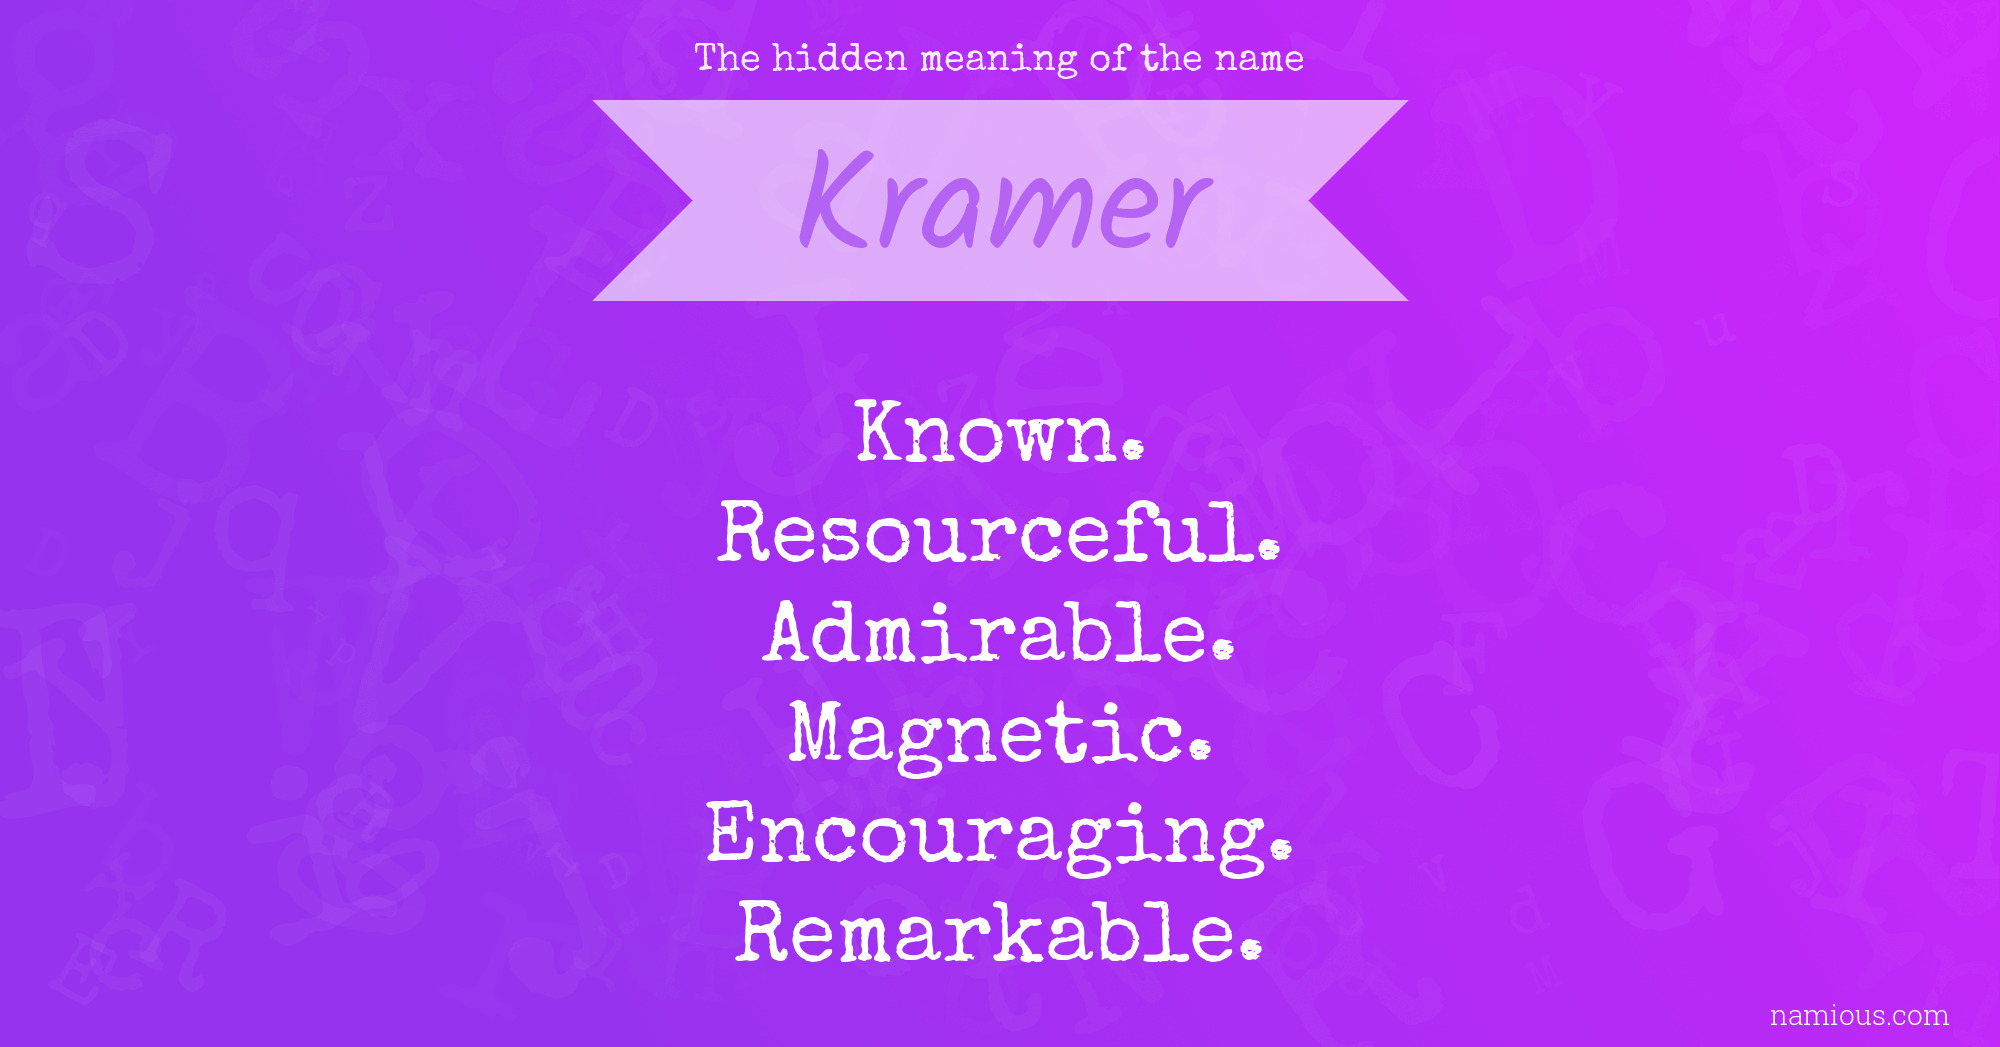 The hidden meaning of the name Kramer